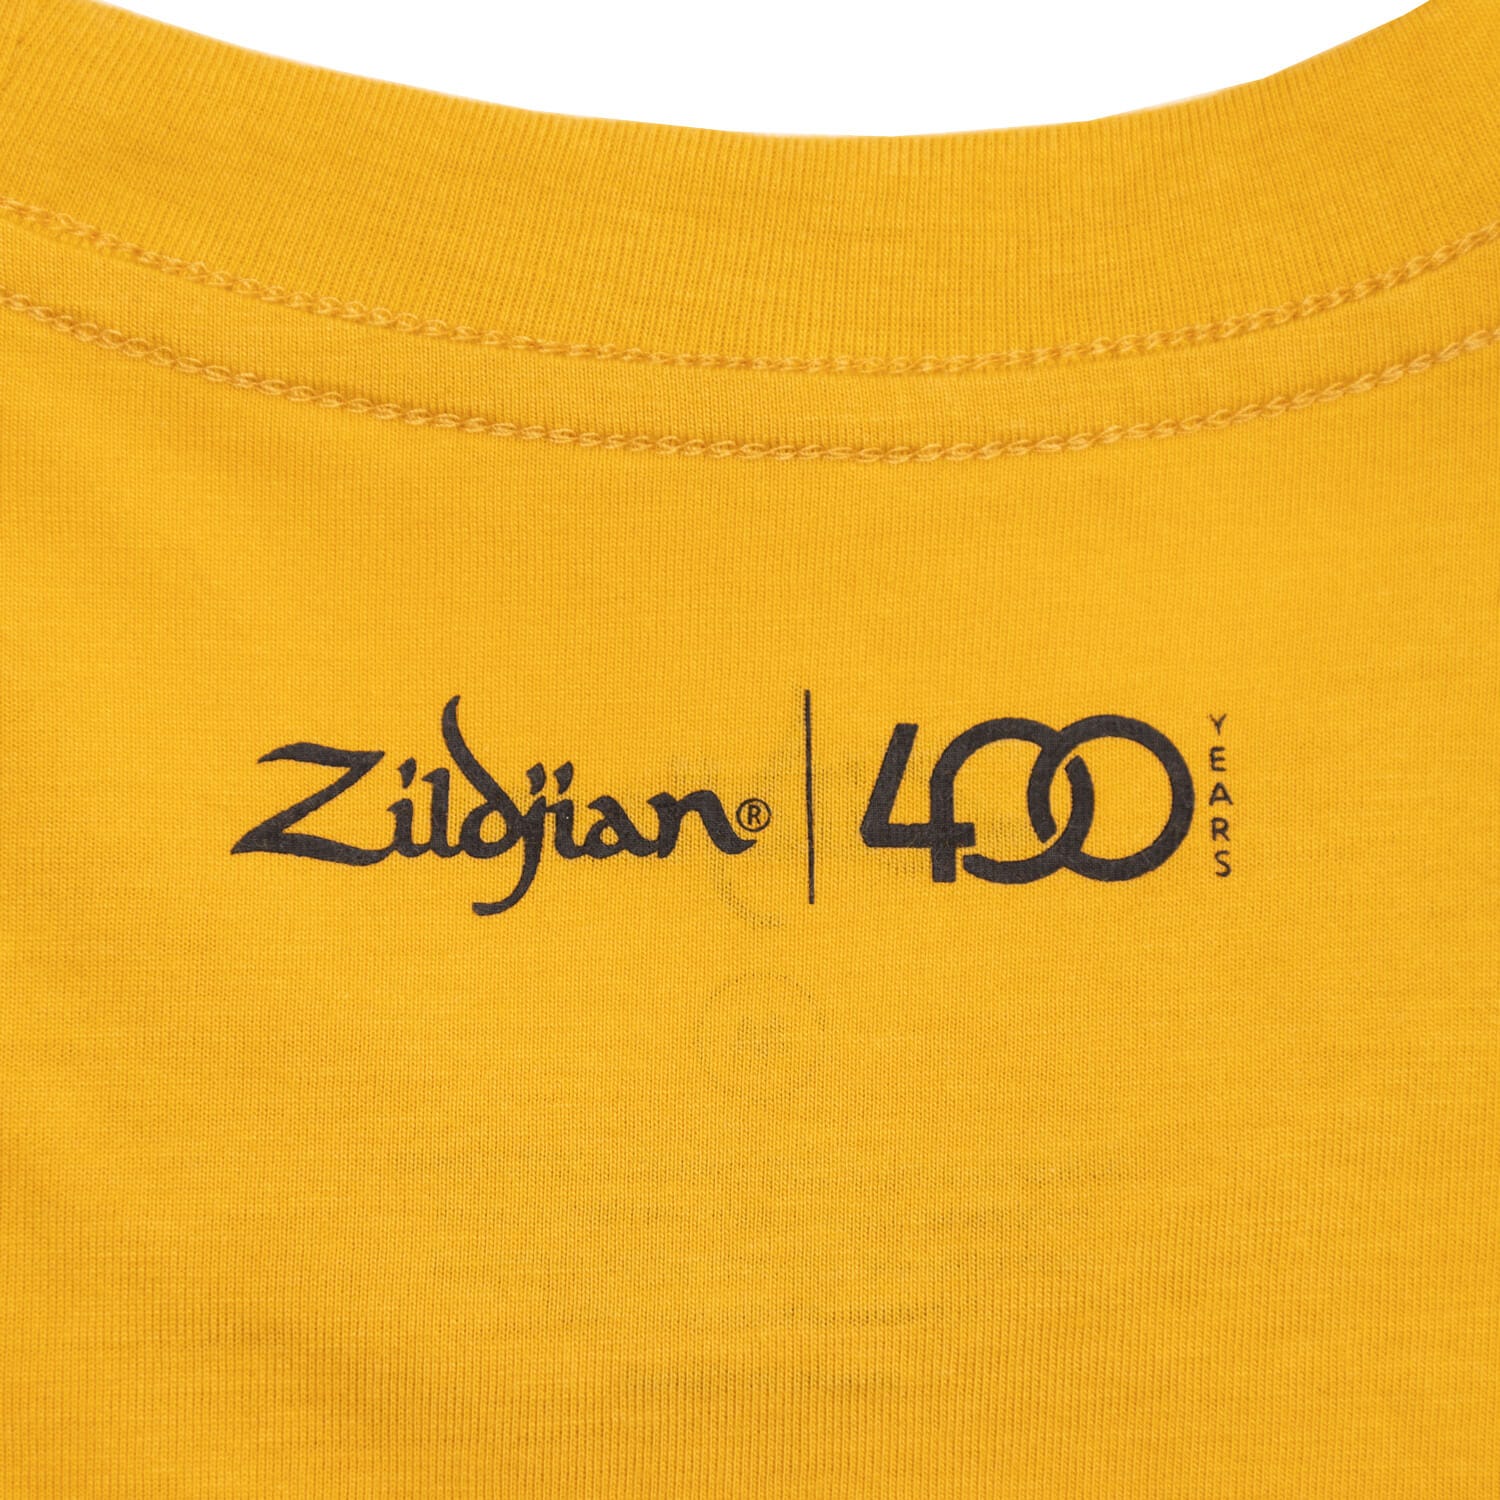 Zildjian Limited Edition 400th Anniversary 60s Rock Tee Back decal